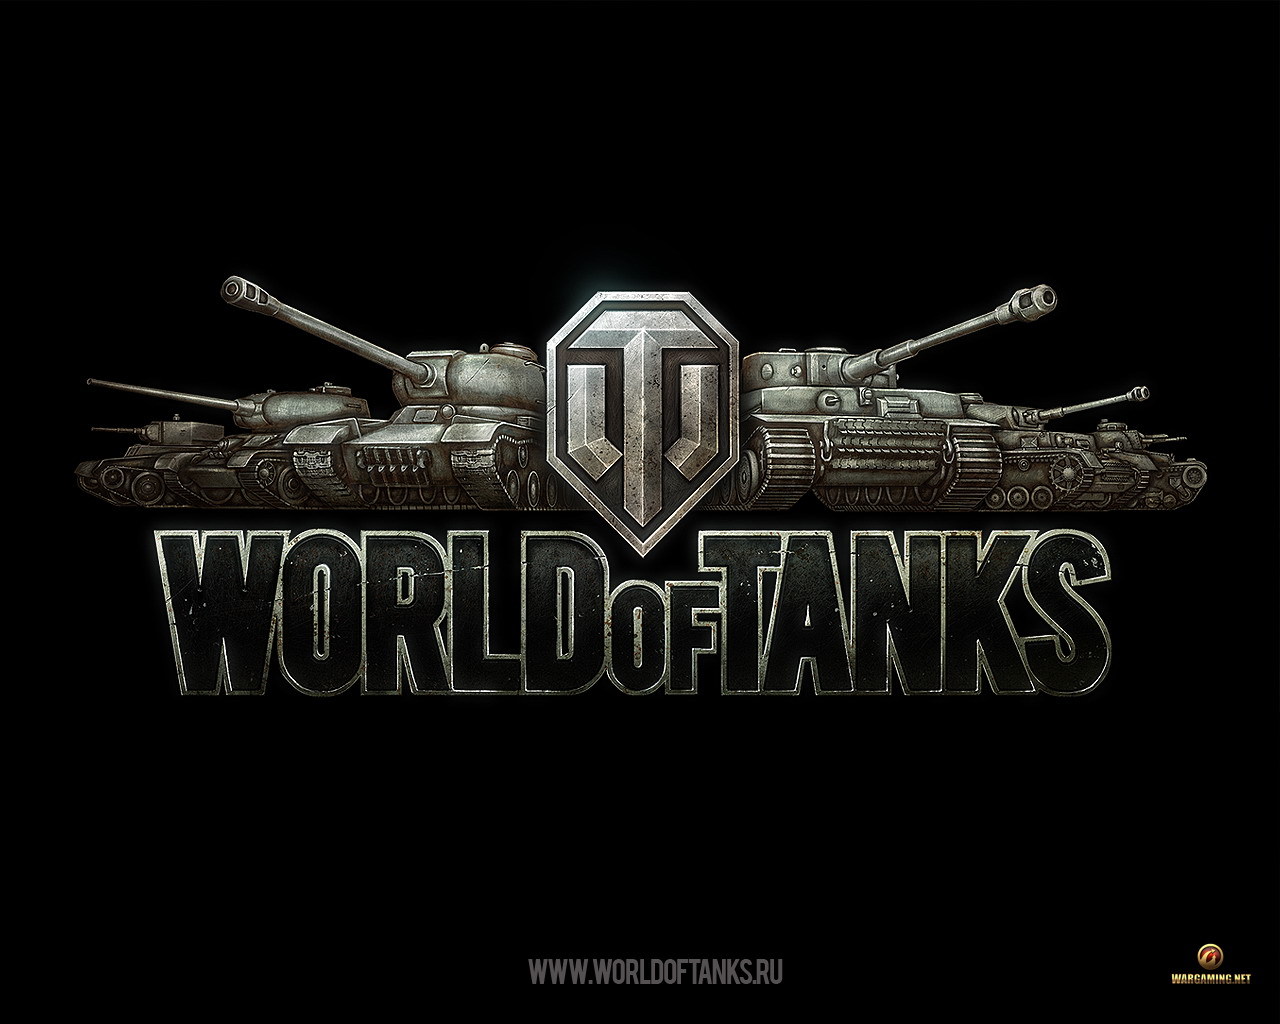 world of tanks, games, background, logos, black